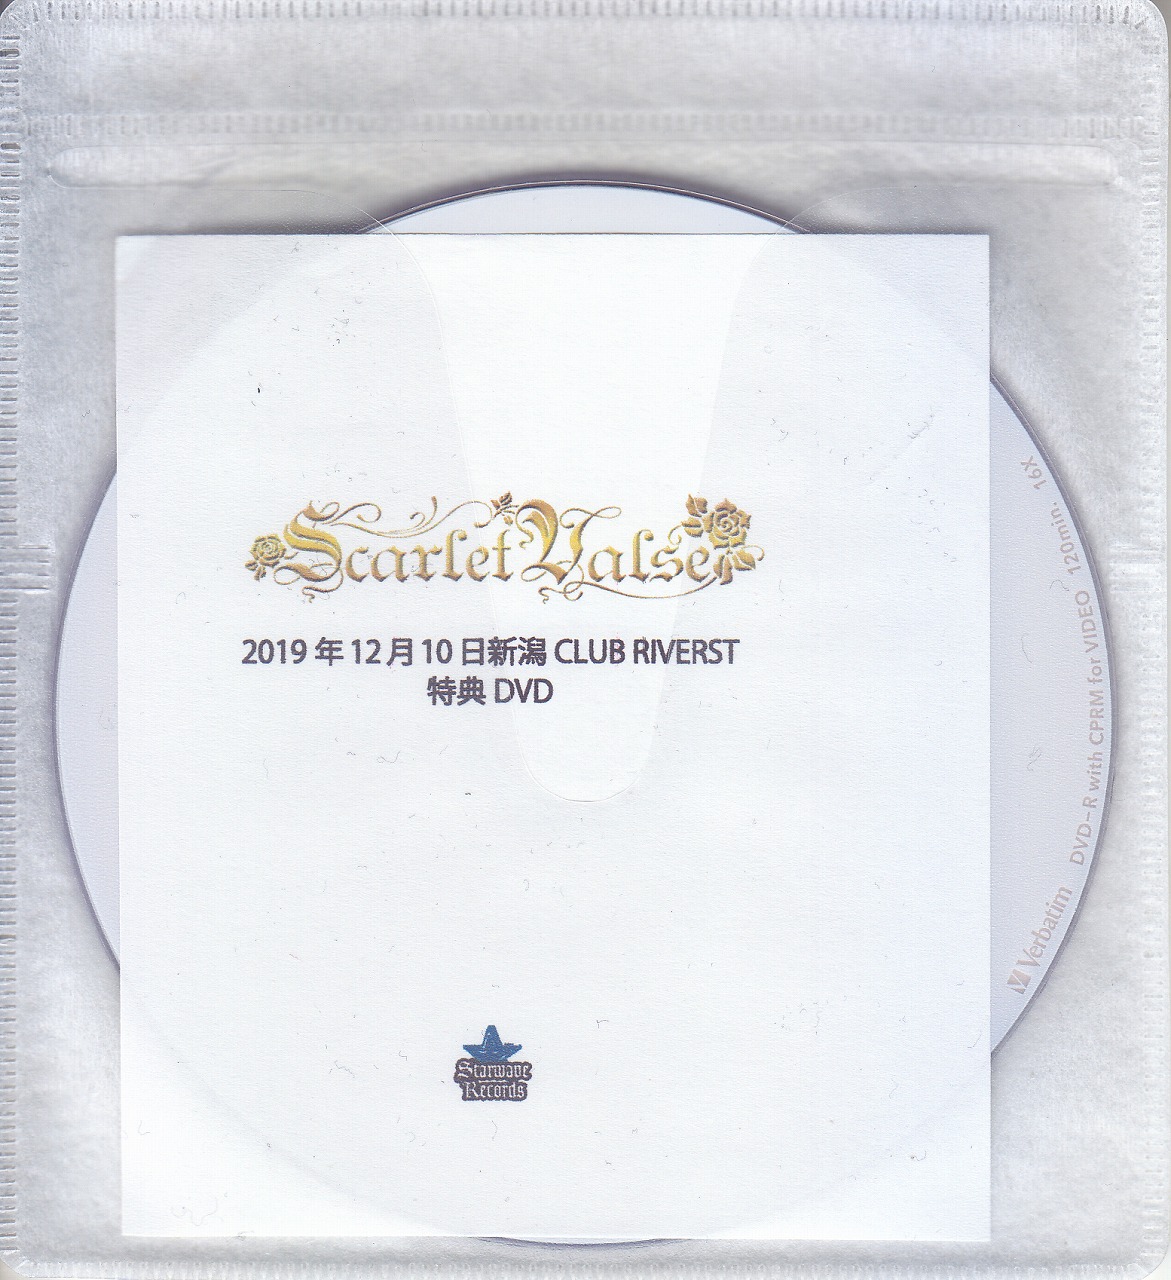 Scarlet Valse ( スカーレットバルス )  の DVD 2019年12月10日新潟CLUB RIVERST 特典DVD